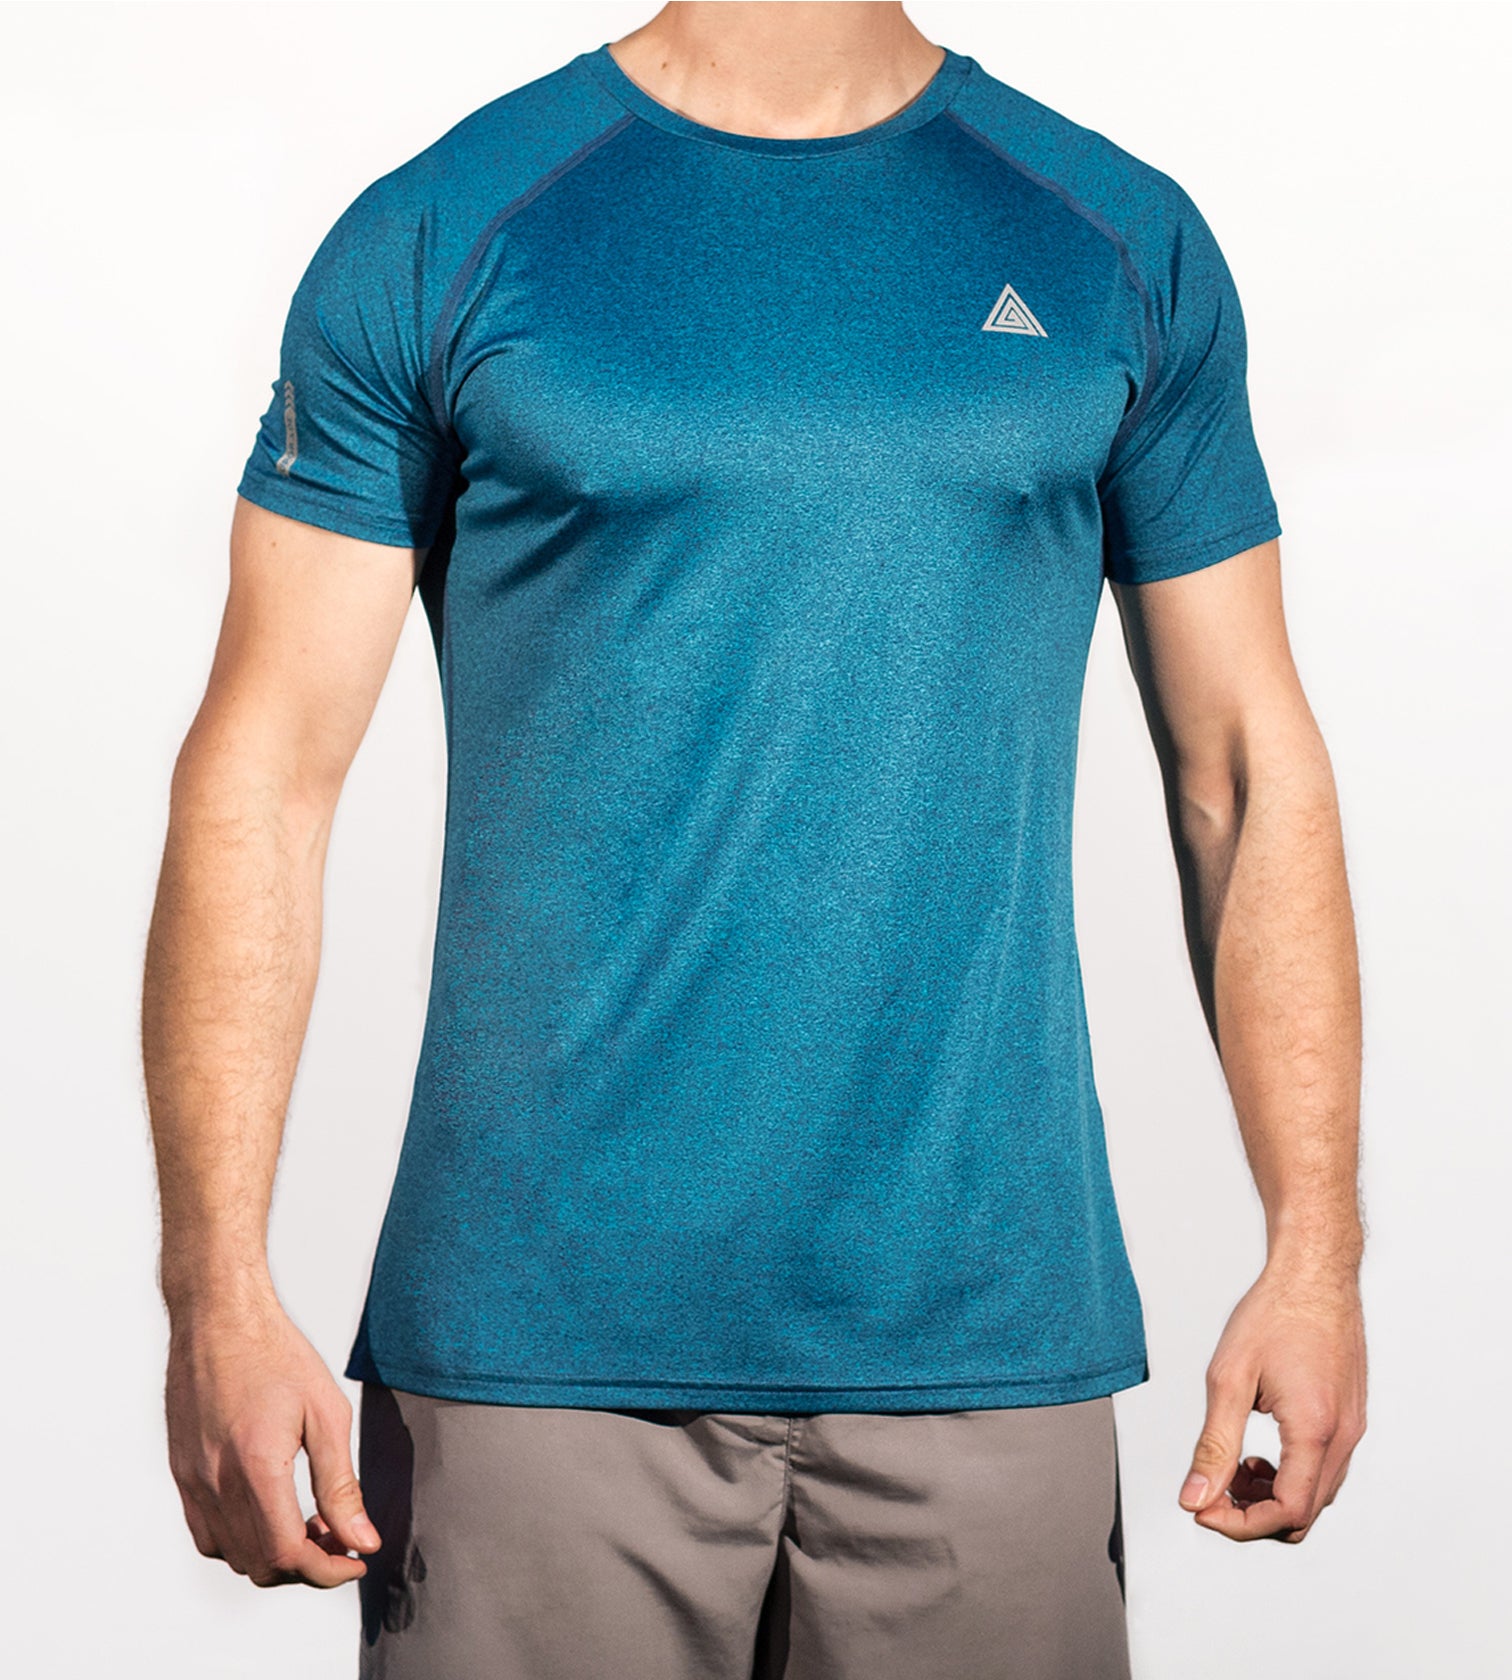 Camisetas tecnicas para running, trail running, trekking, gym